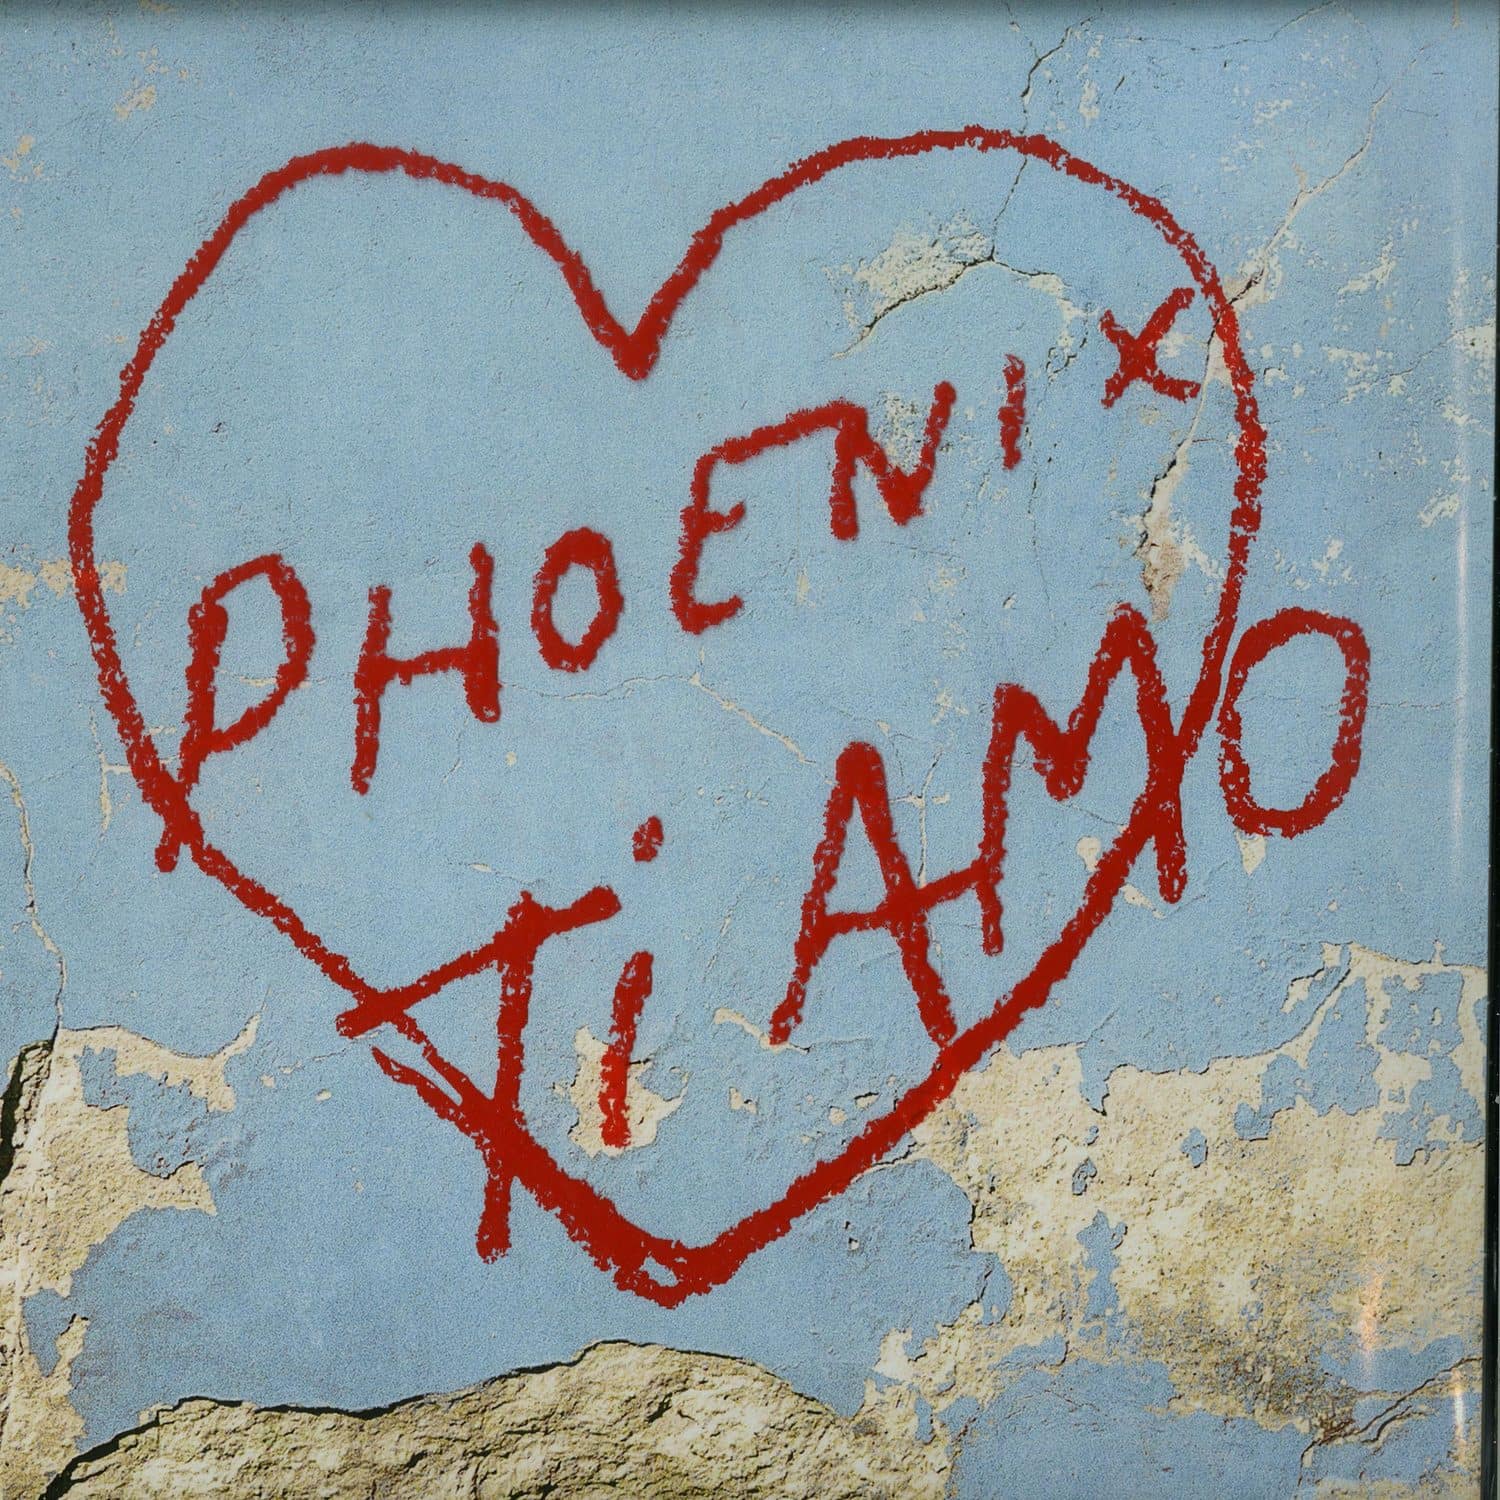 Phoenix - TI AMO 